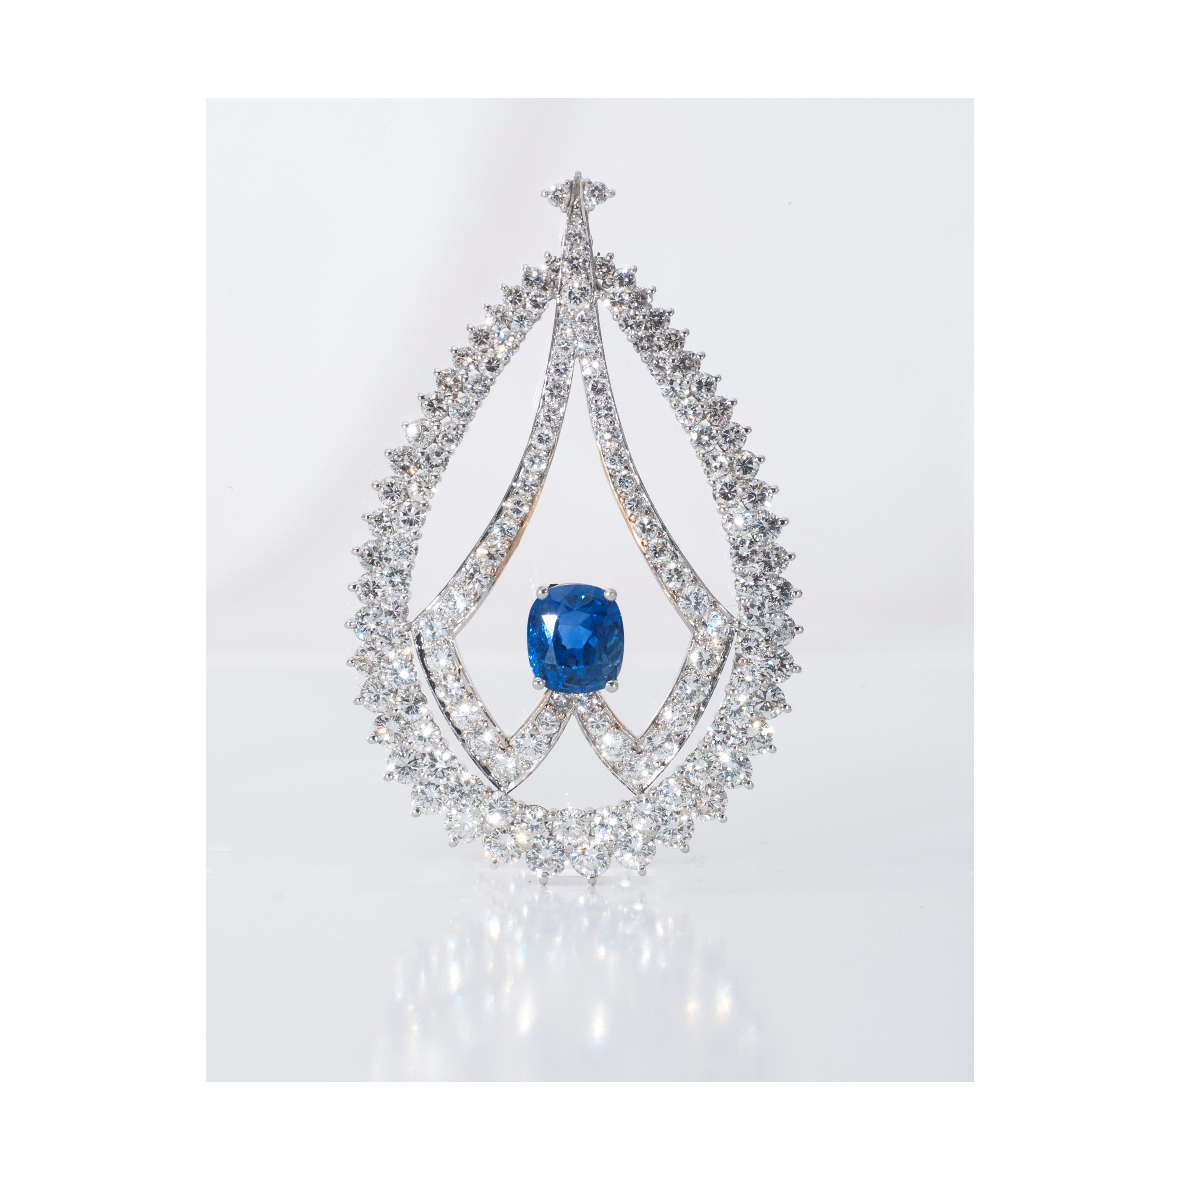 A large sapphire diamond pendant